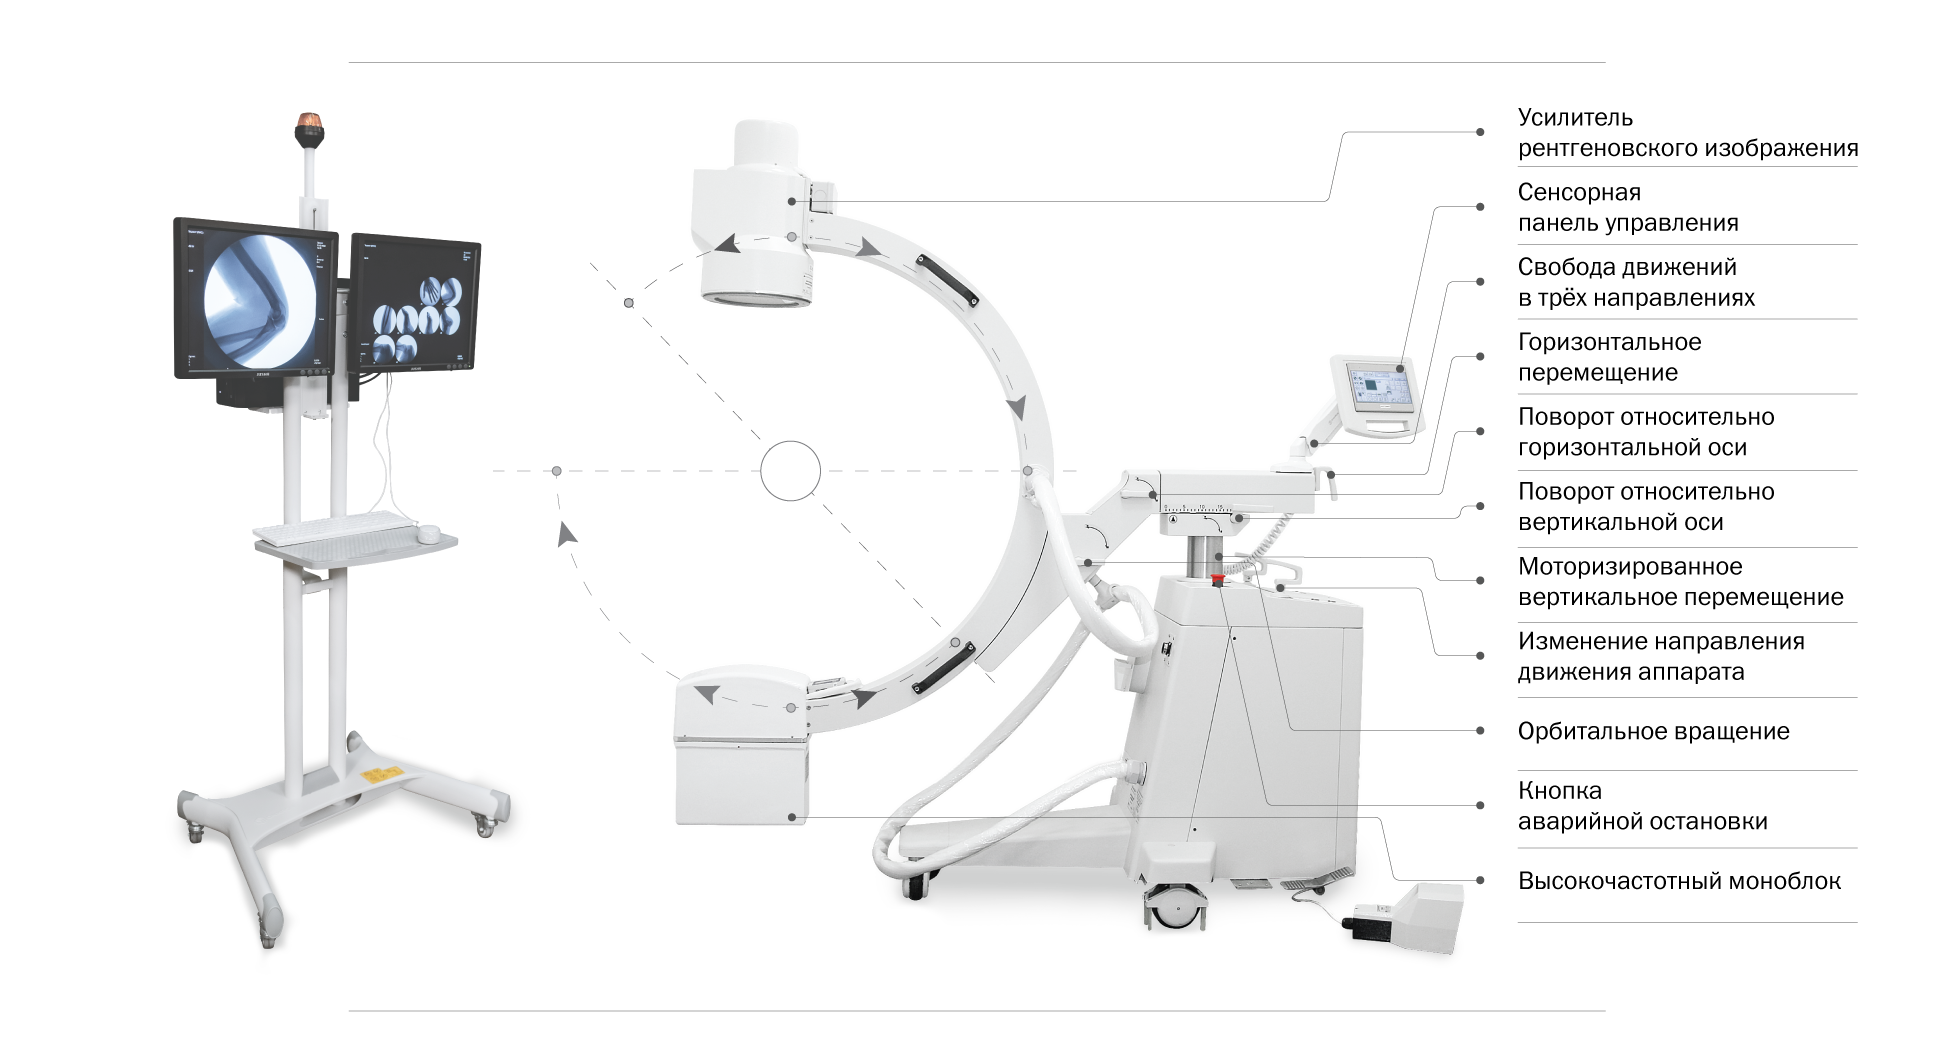 Аппарат рентгенохирургический передвижной АРХП-АМИКО